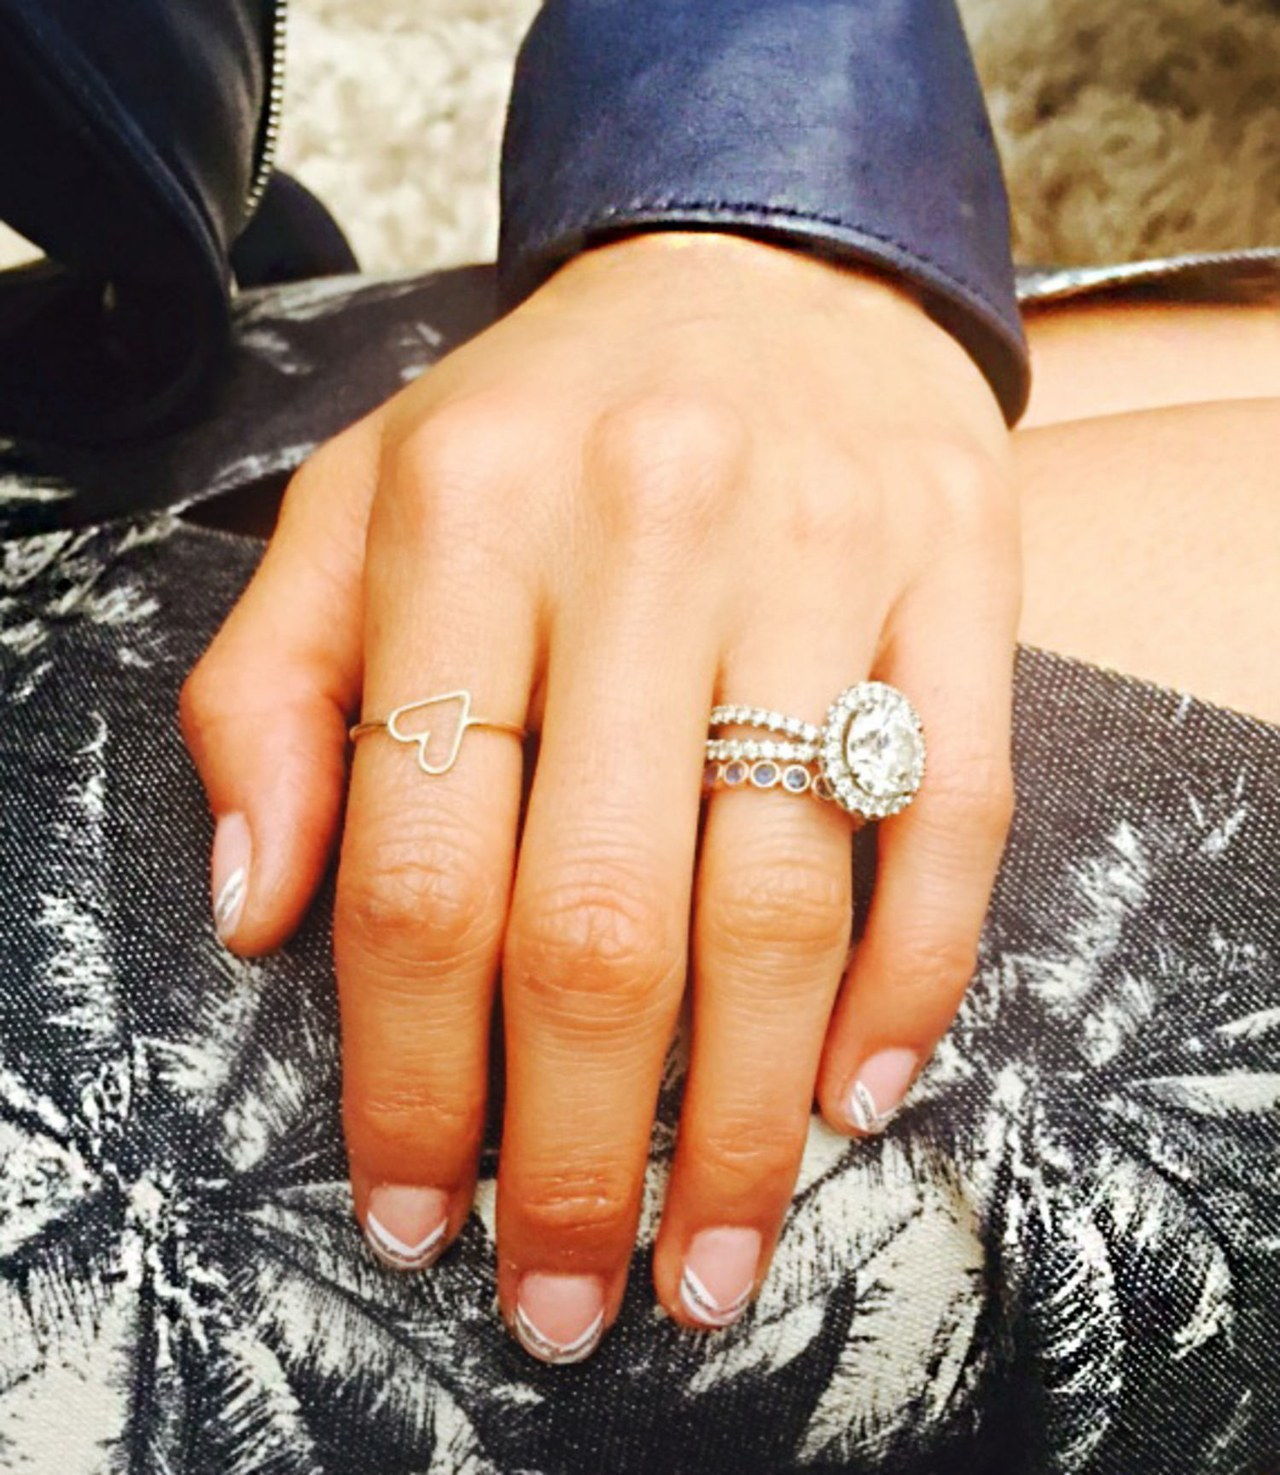 Jamie chung engagement ring